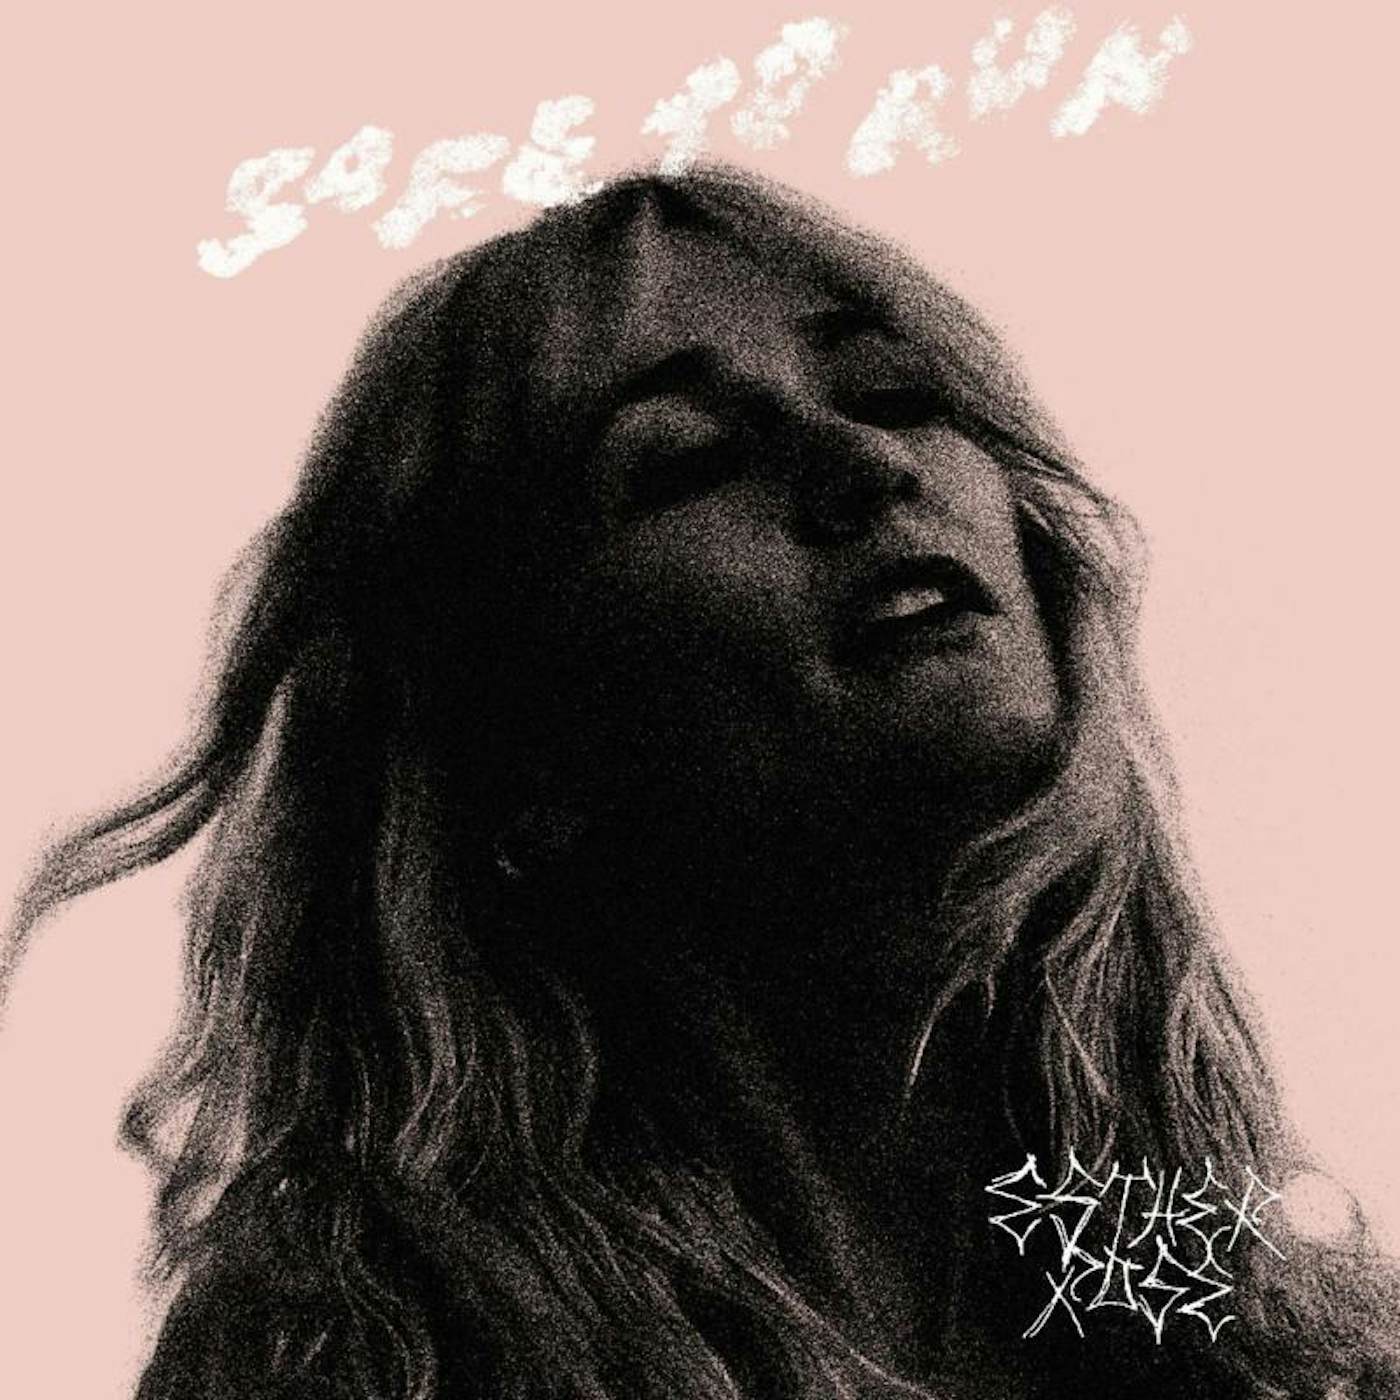 Esther Rose LP - Safe To Run (Vinyl)